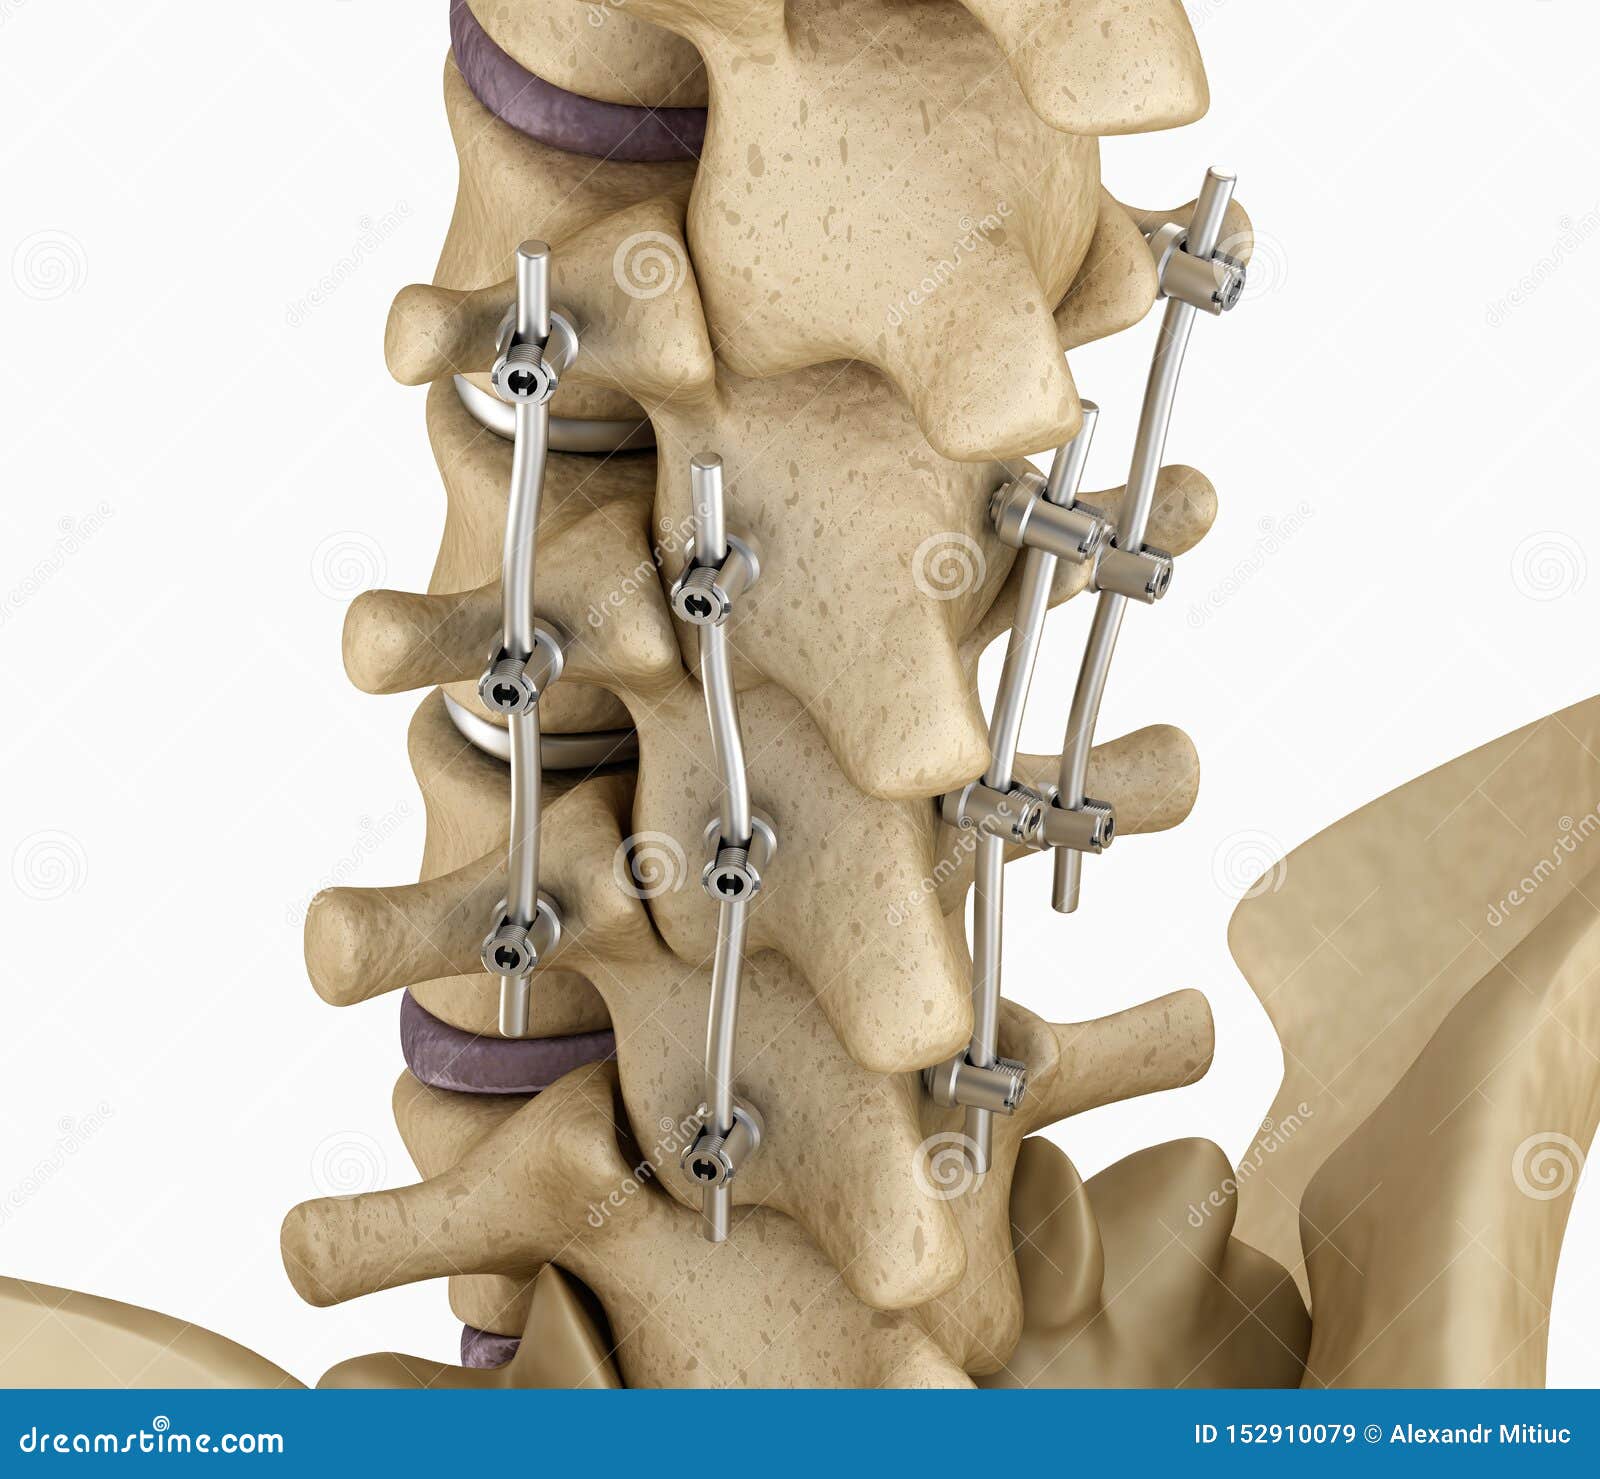 spinal fixation system - titanium bracket.